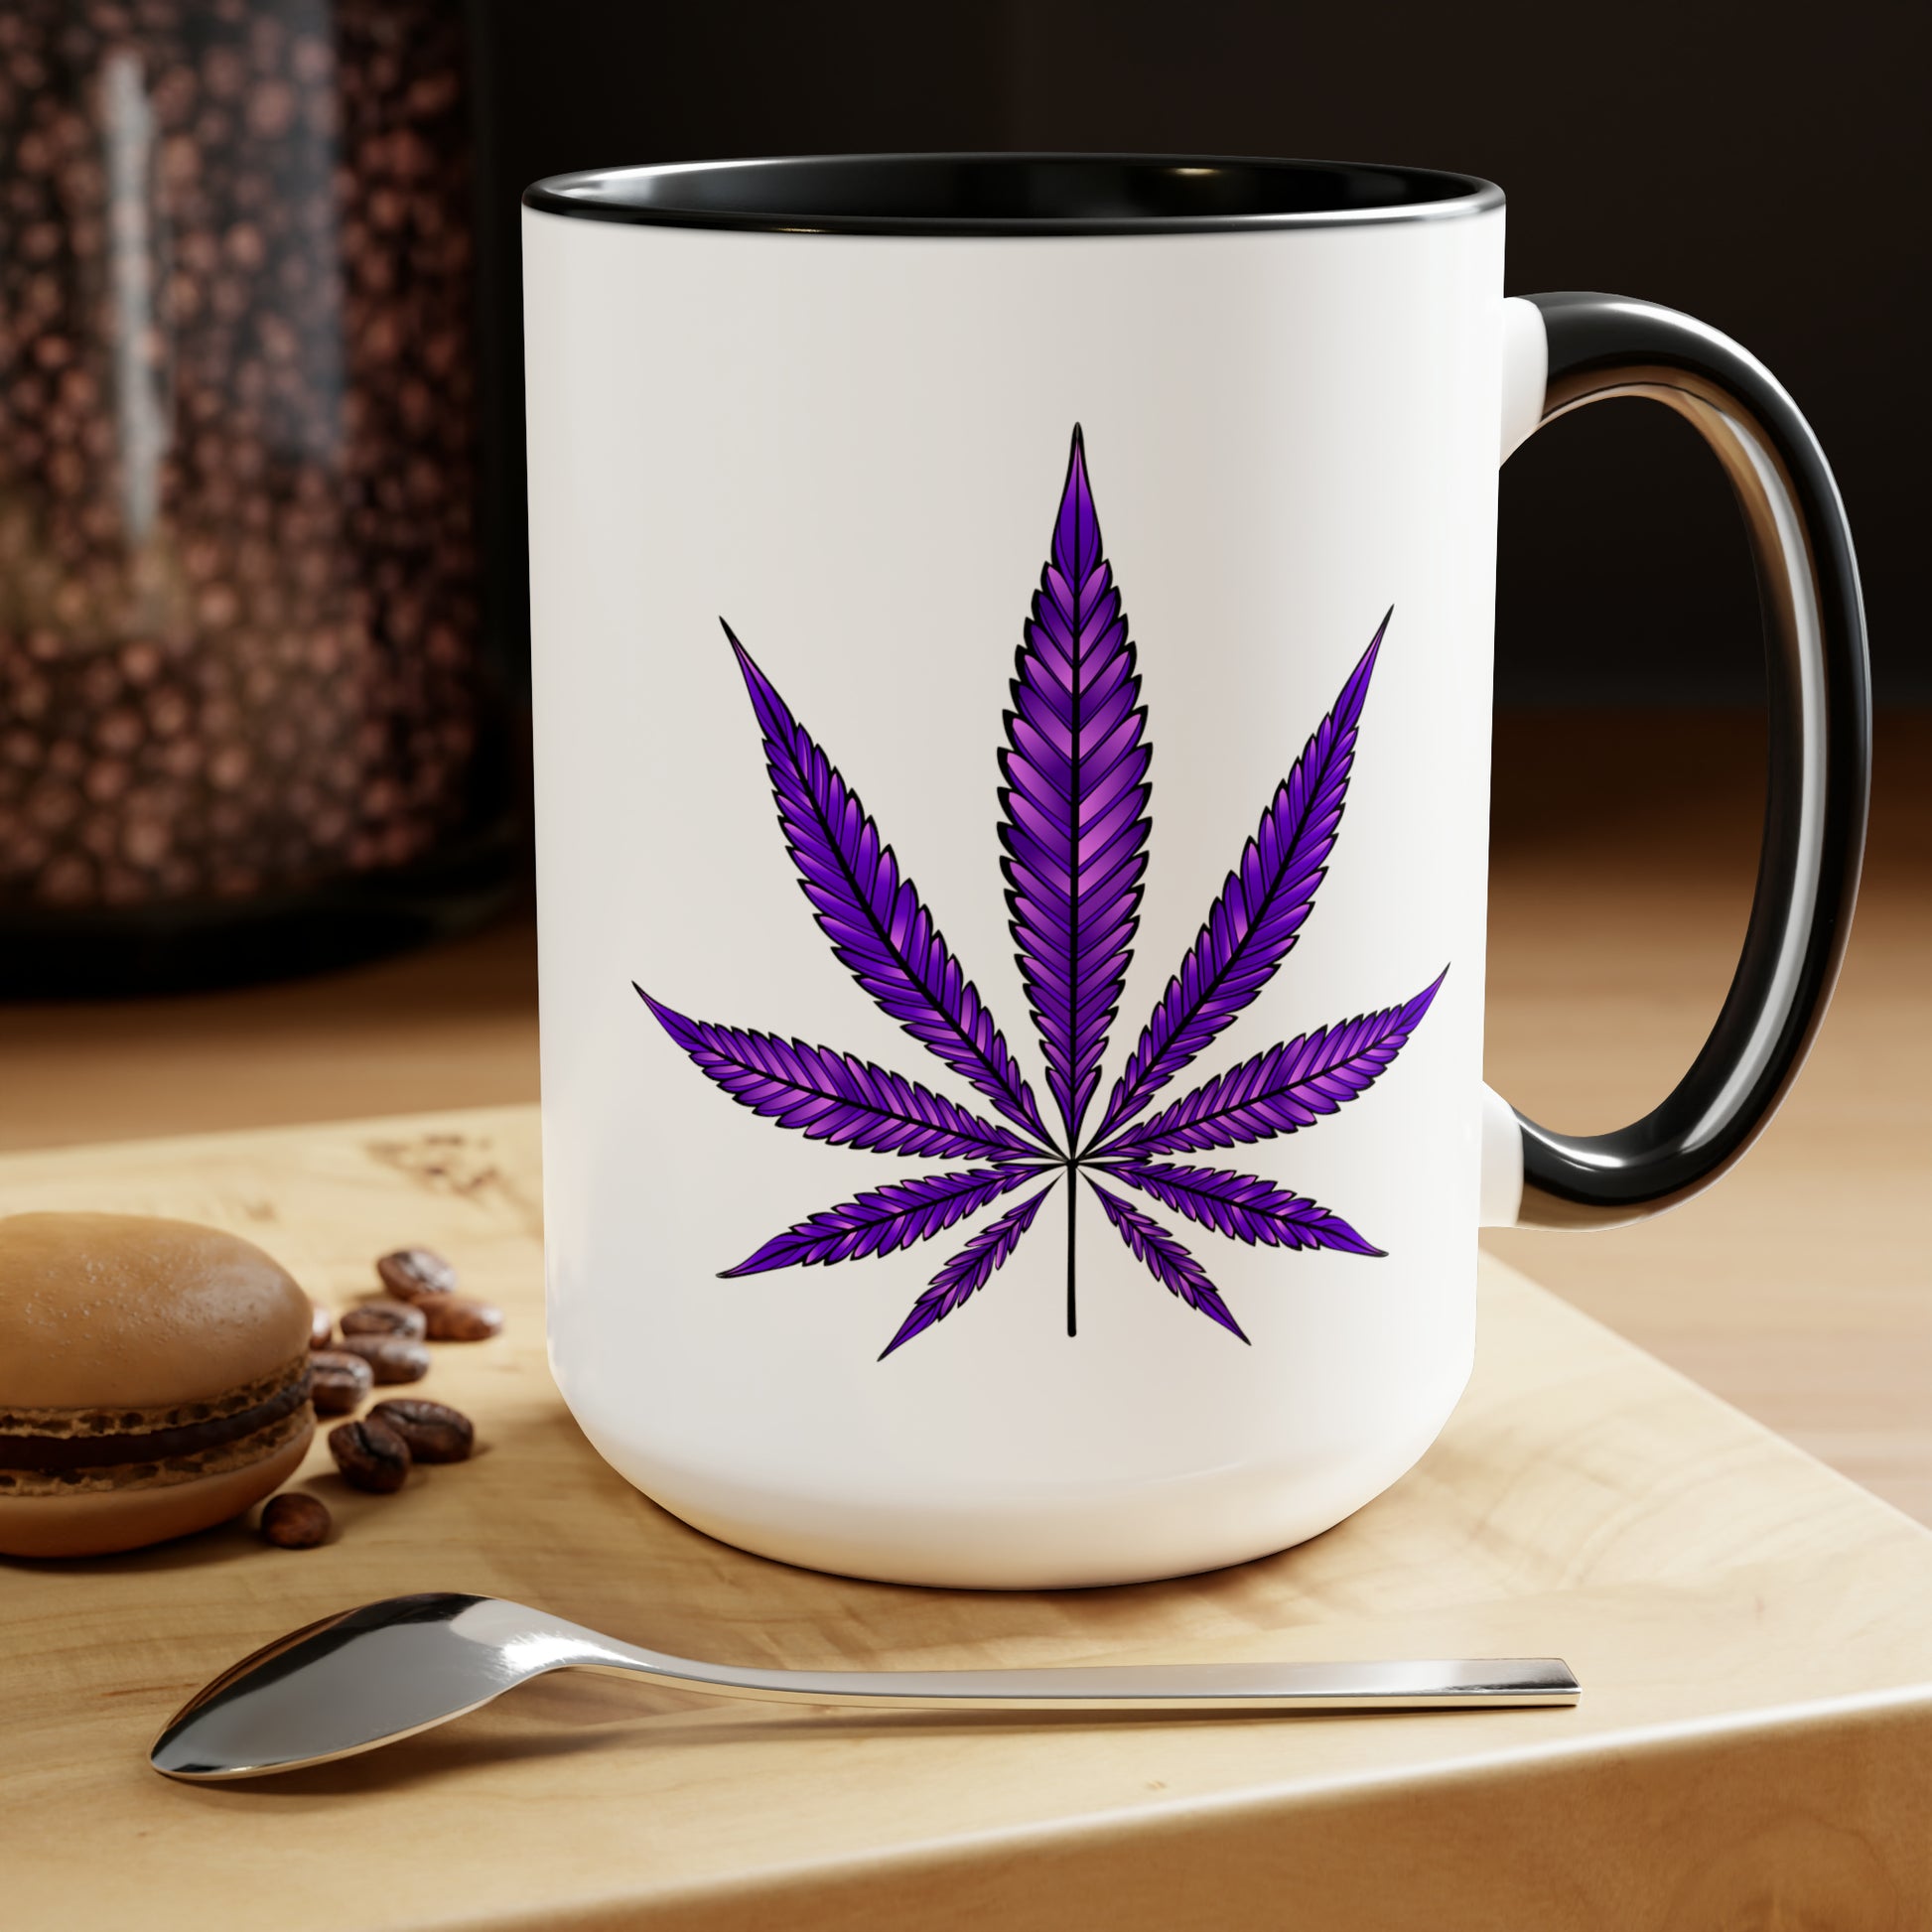 A Purple Haze Marijuana Coffee Mug with a leaf design on it, placed on a wooden table next to a spoon and a macaron.